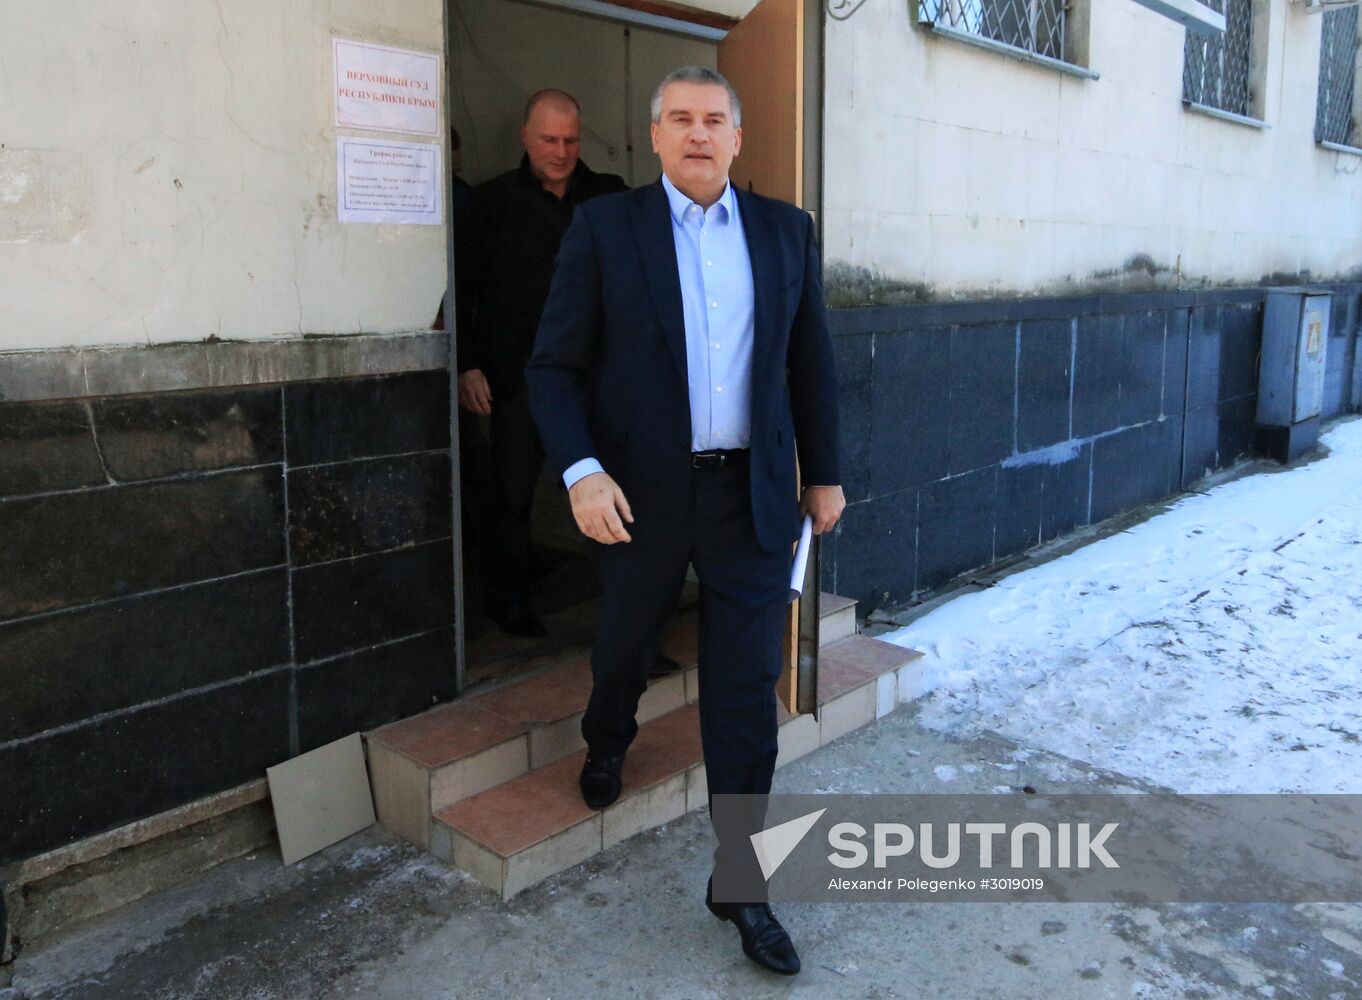 Sergei Aksyonov testifies in Crimea's court on 2014 riots outside State Council